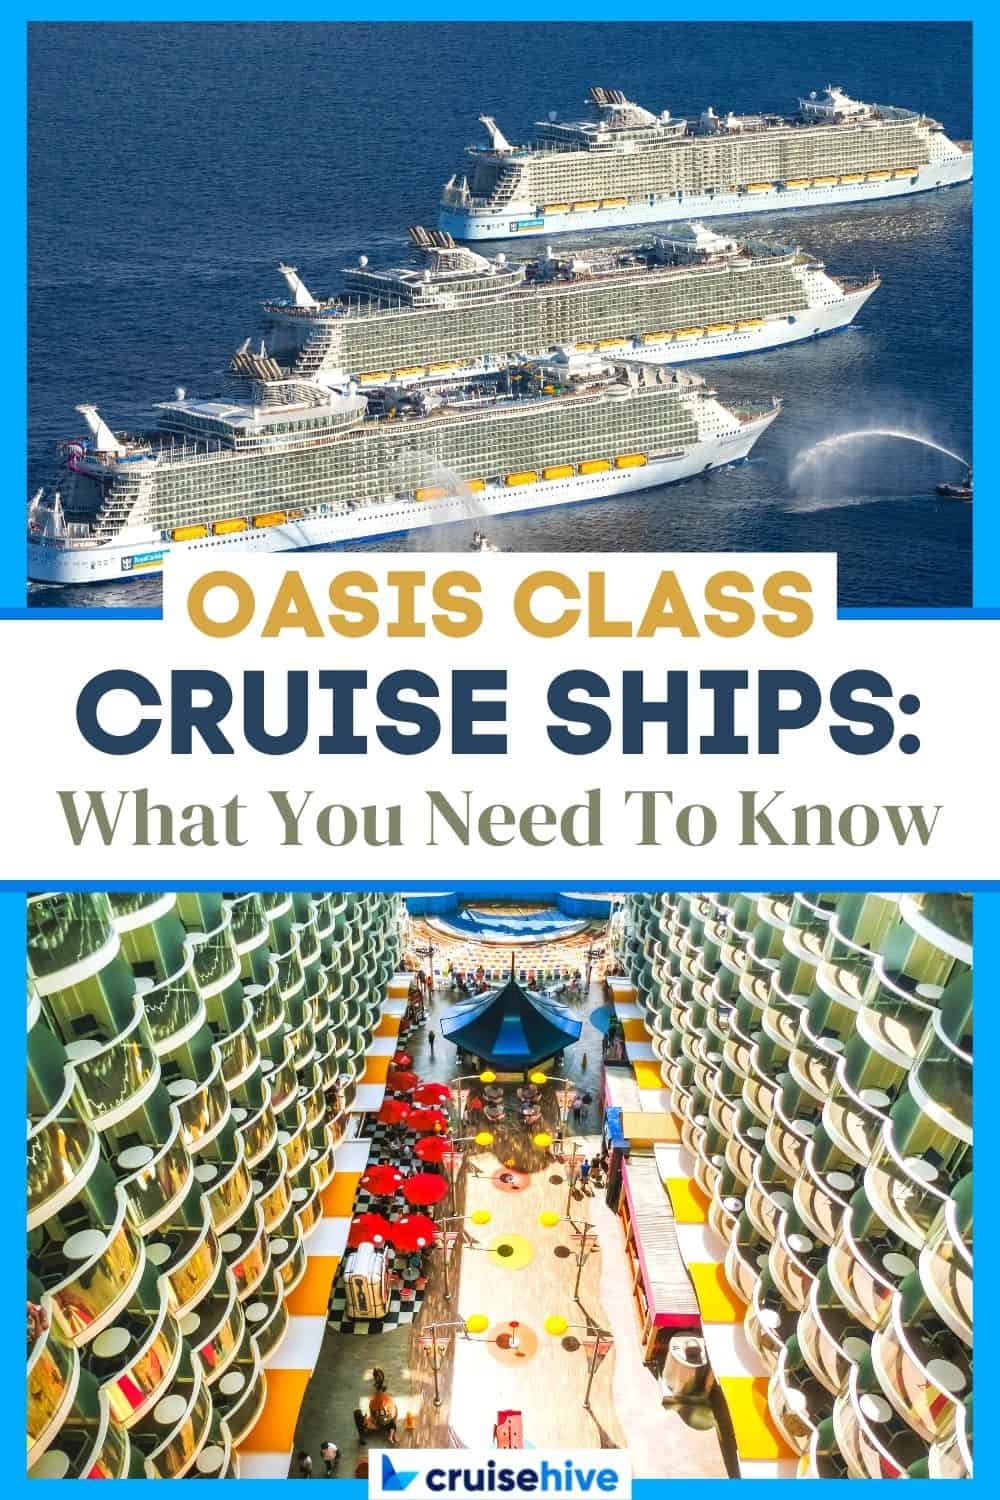 Cruceros clase Oasis